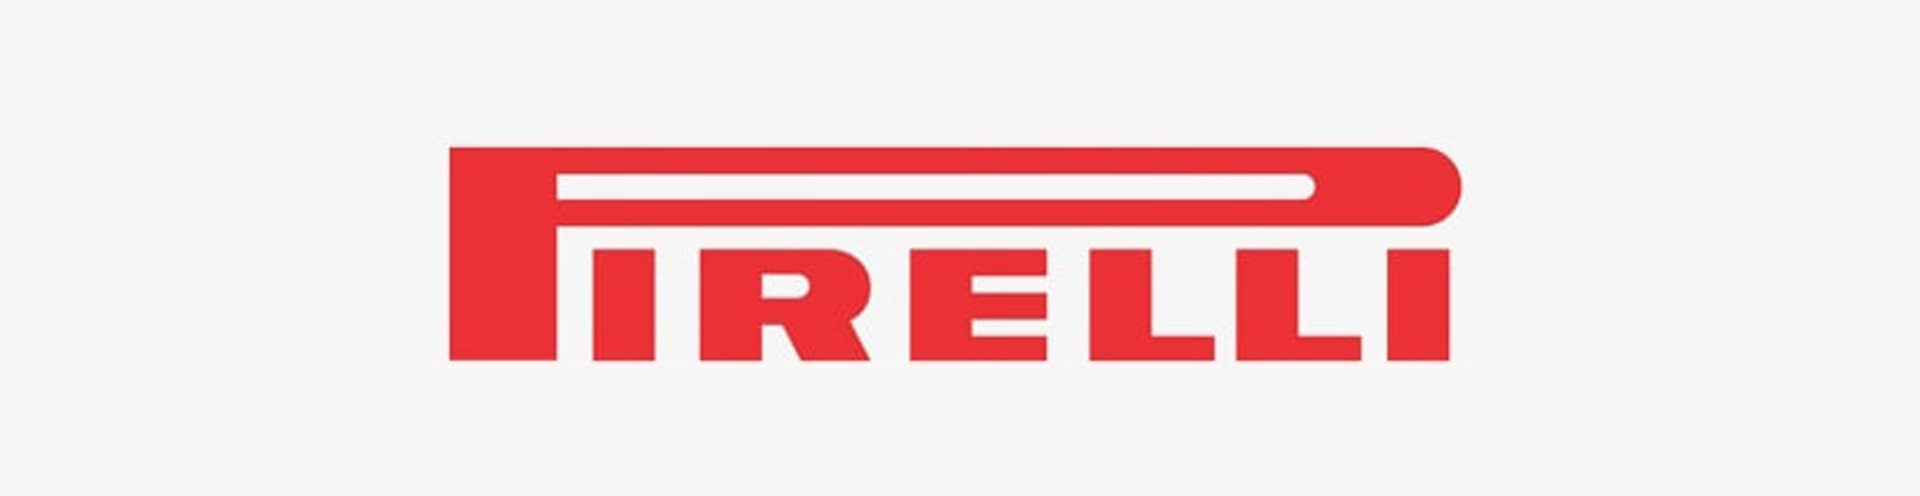 Pirelli-Logo